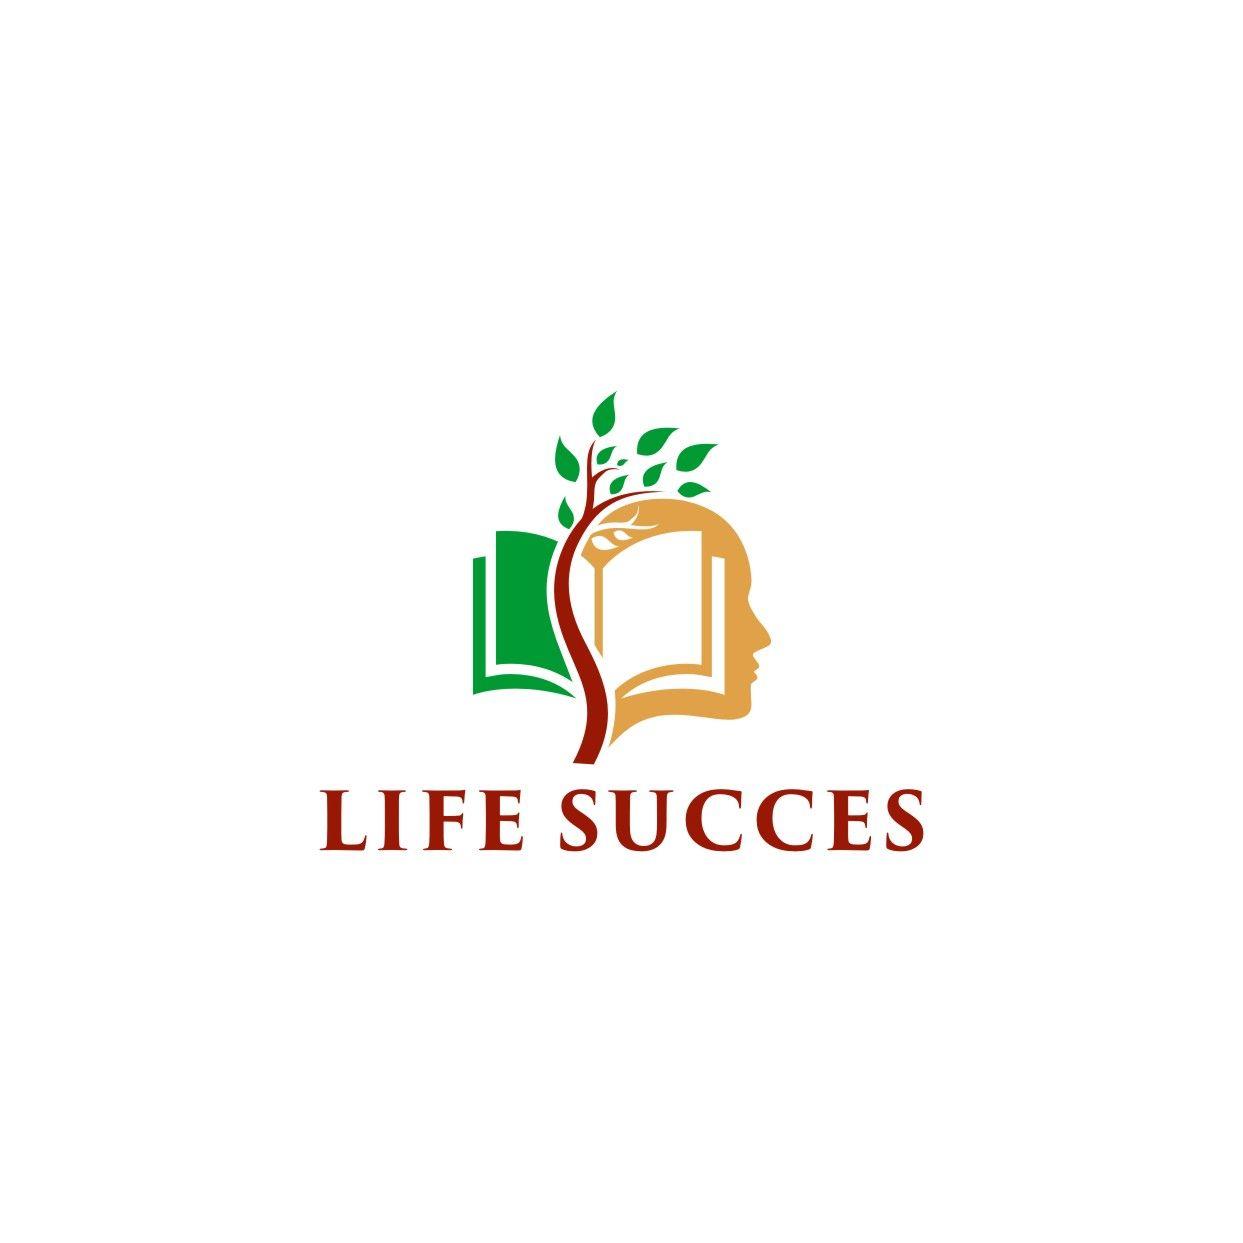 Coaching Logo - Modern, Bold, Life Coaching Logo Design for Life Succes